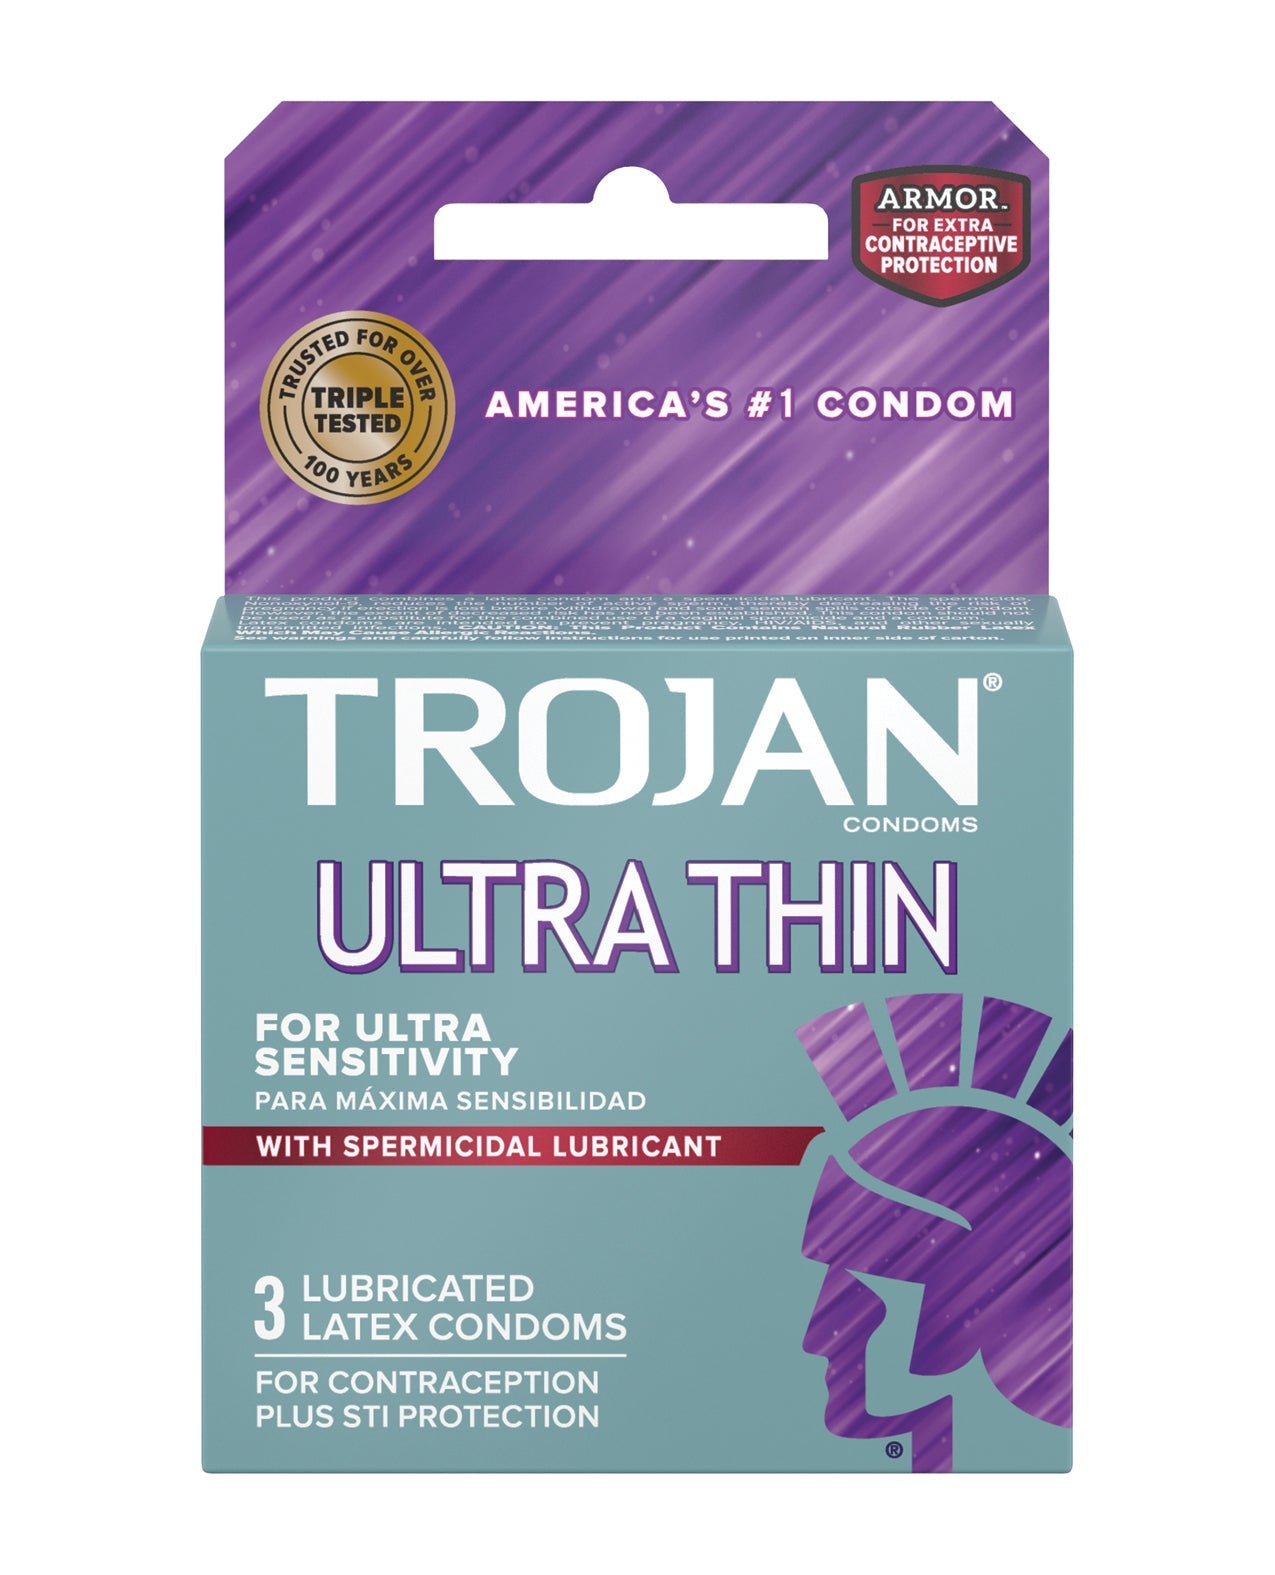 Trojan Ultra Thin Armor Spermicidal - Box of 3